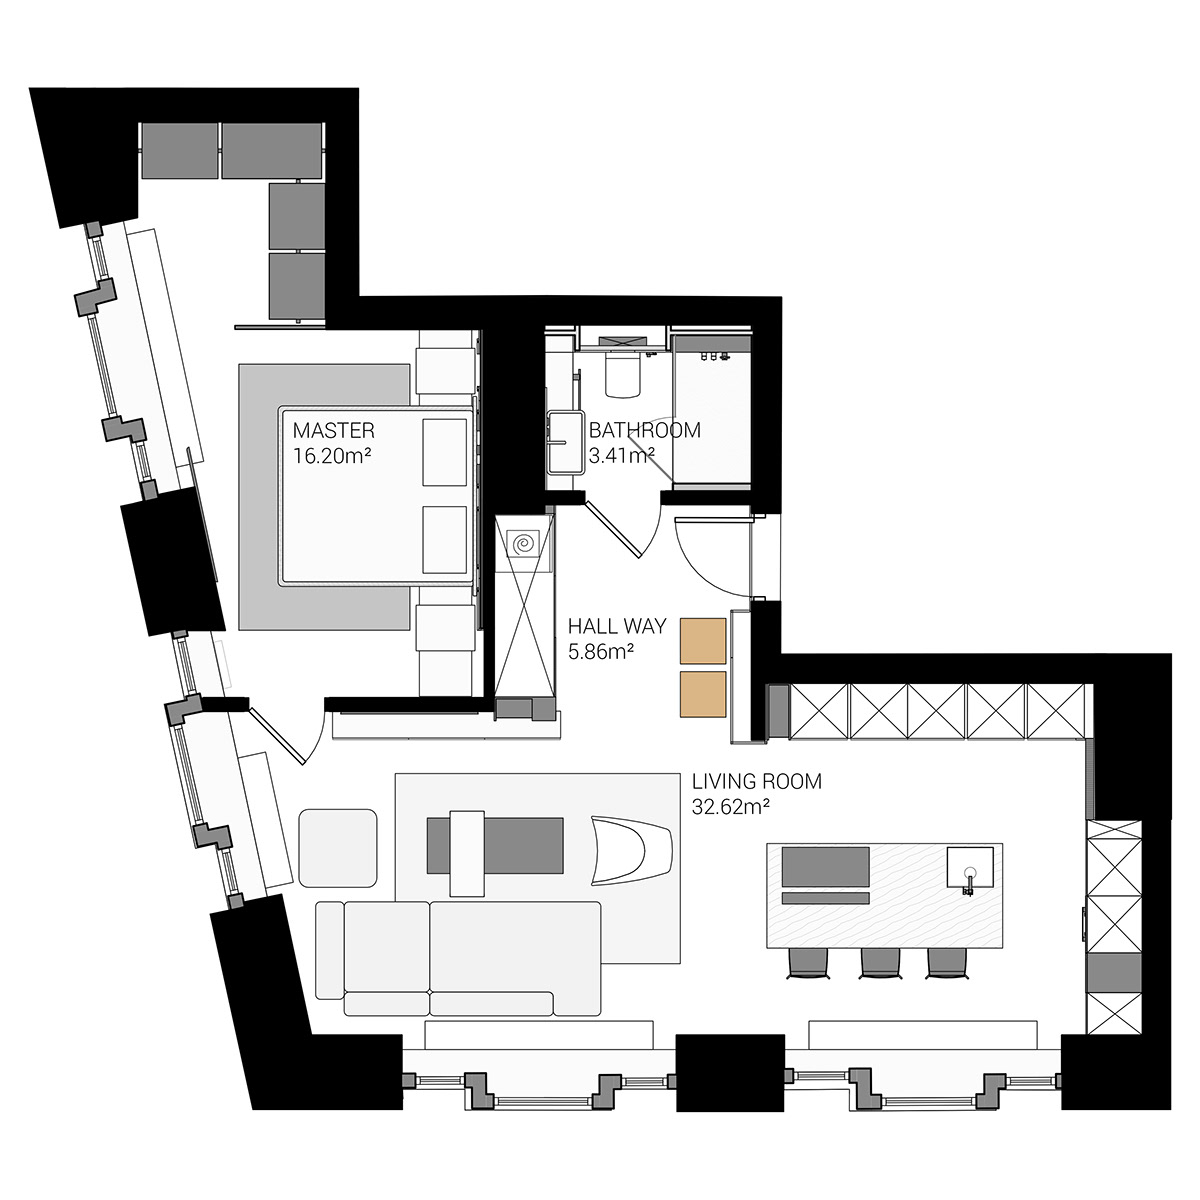 apartment bathroom bedroom interior design  kitchen living room minimal modern monochrome whiteinterior